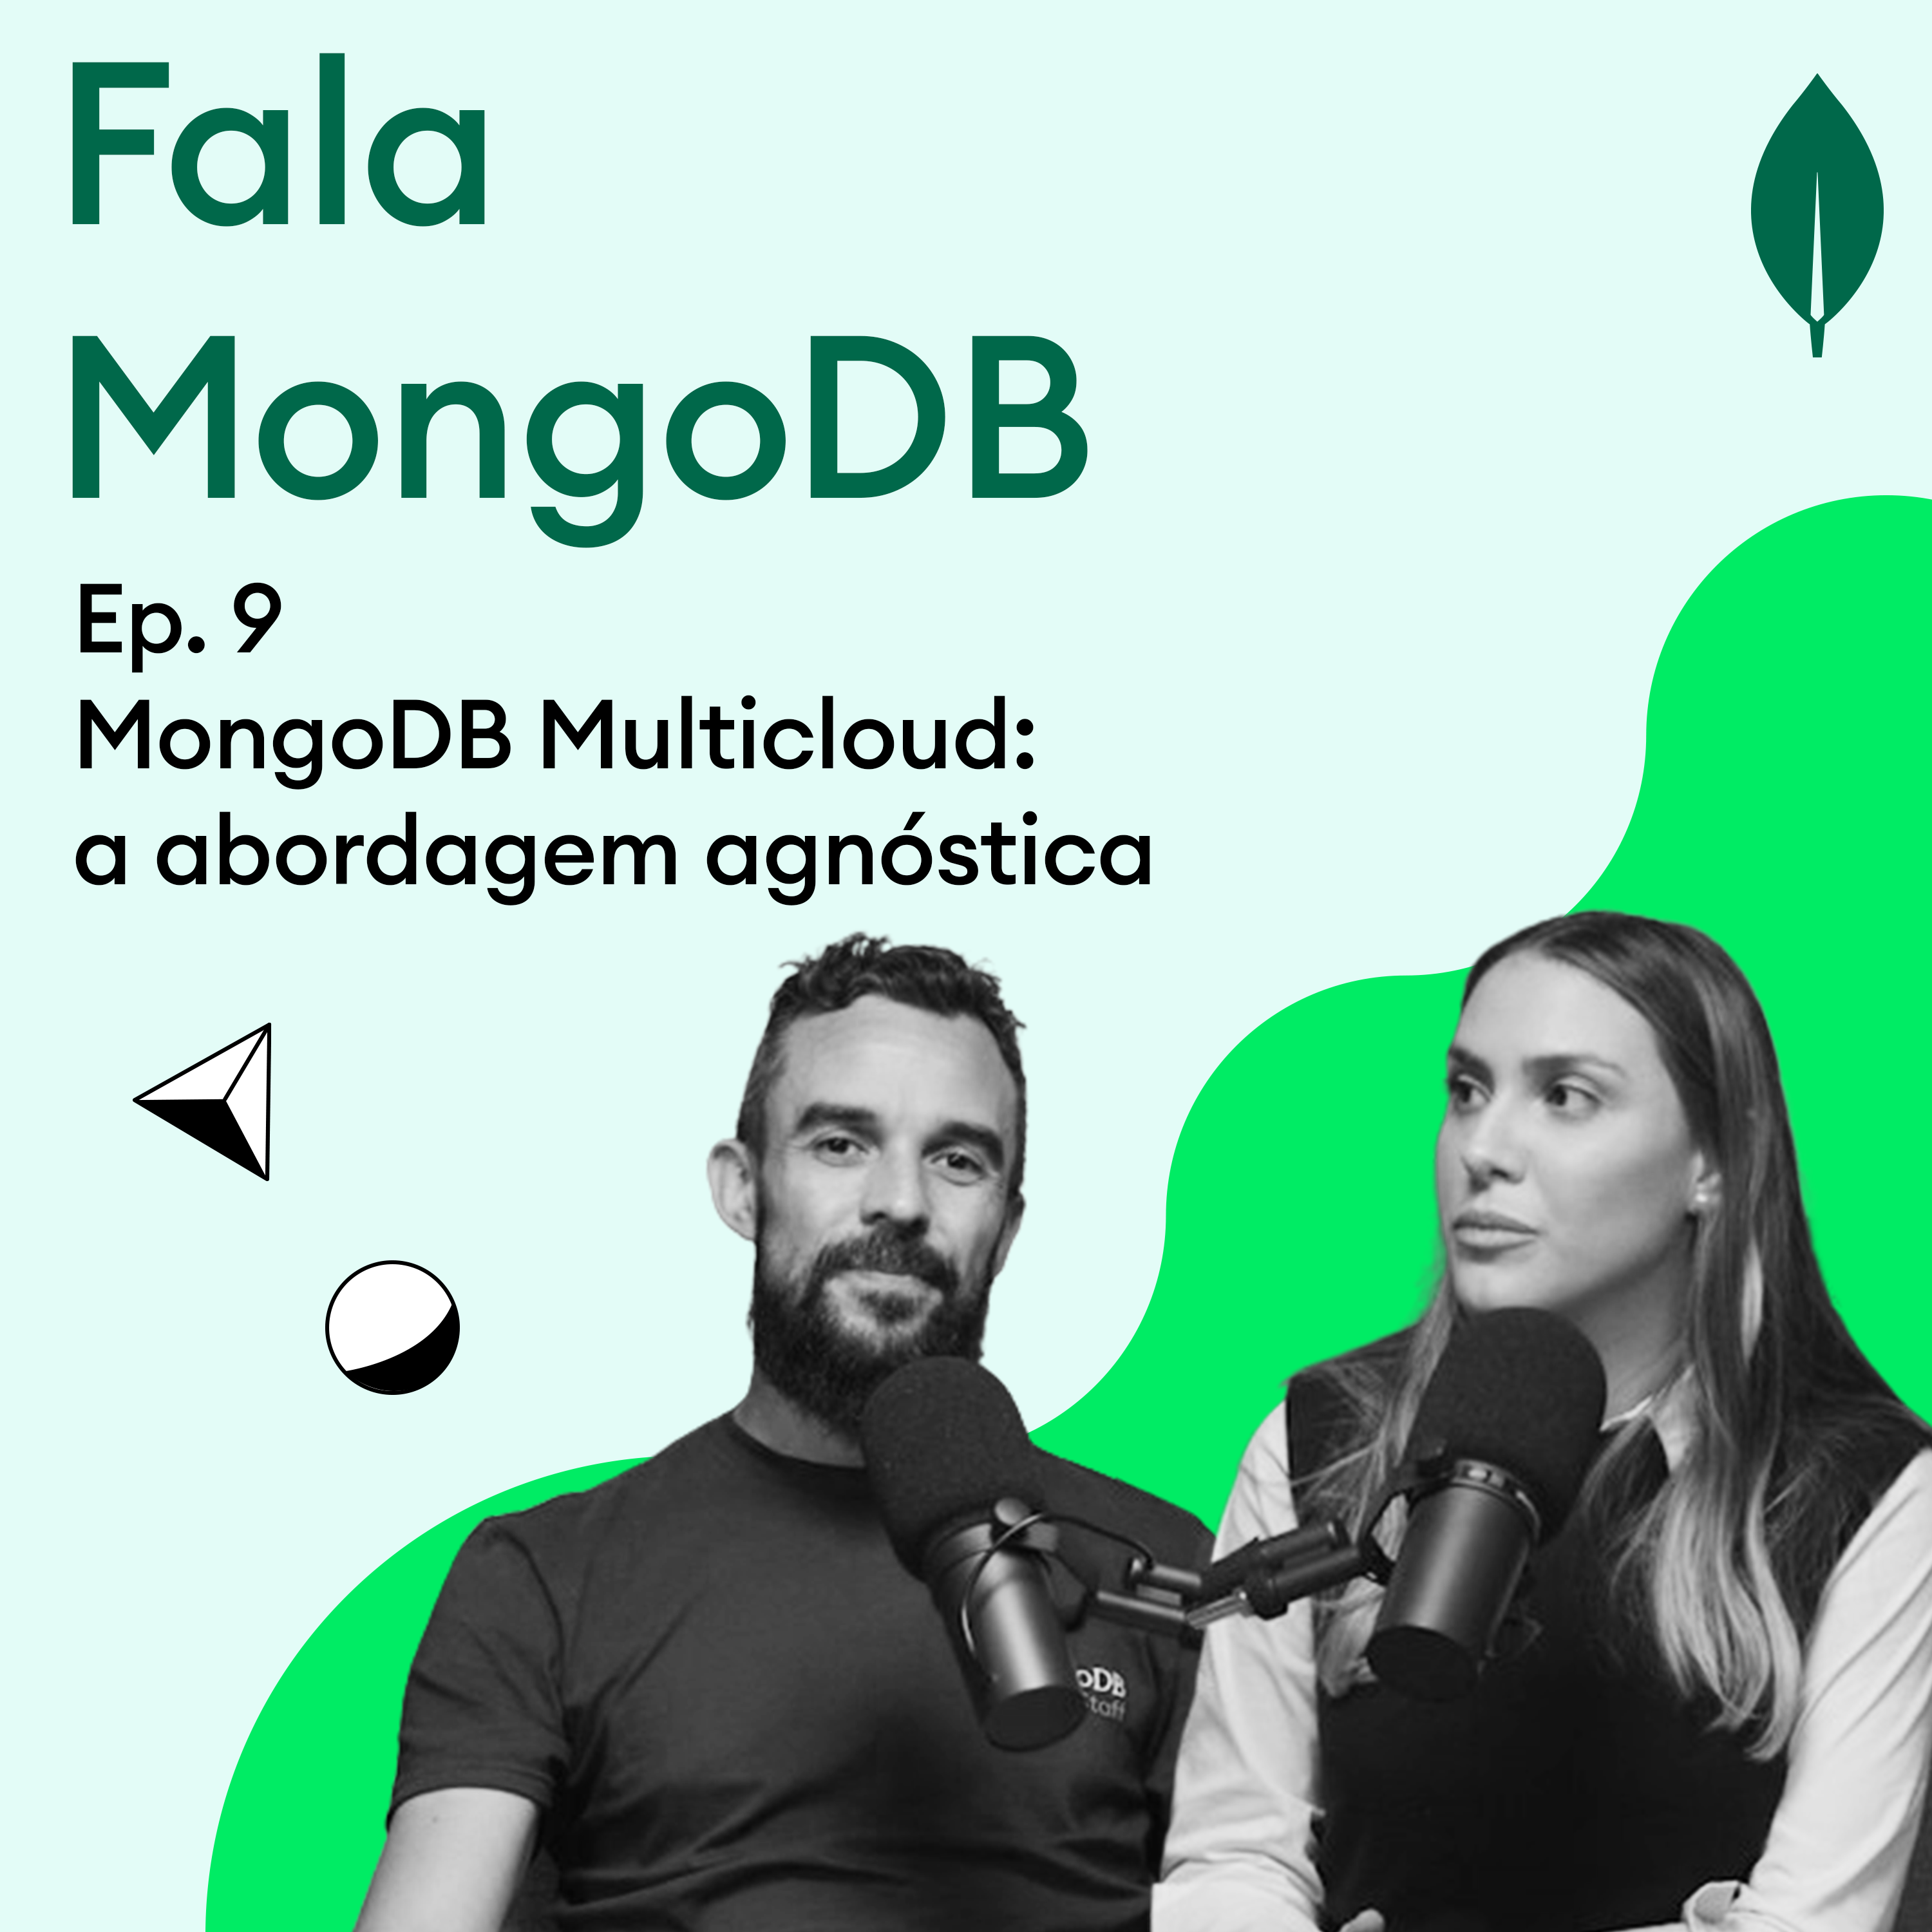 Fala MongoDB Ep. 9 MongoDB Multicloud: a abordagem agnóstica